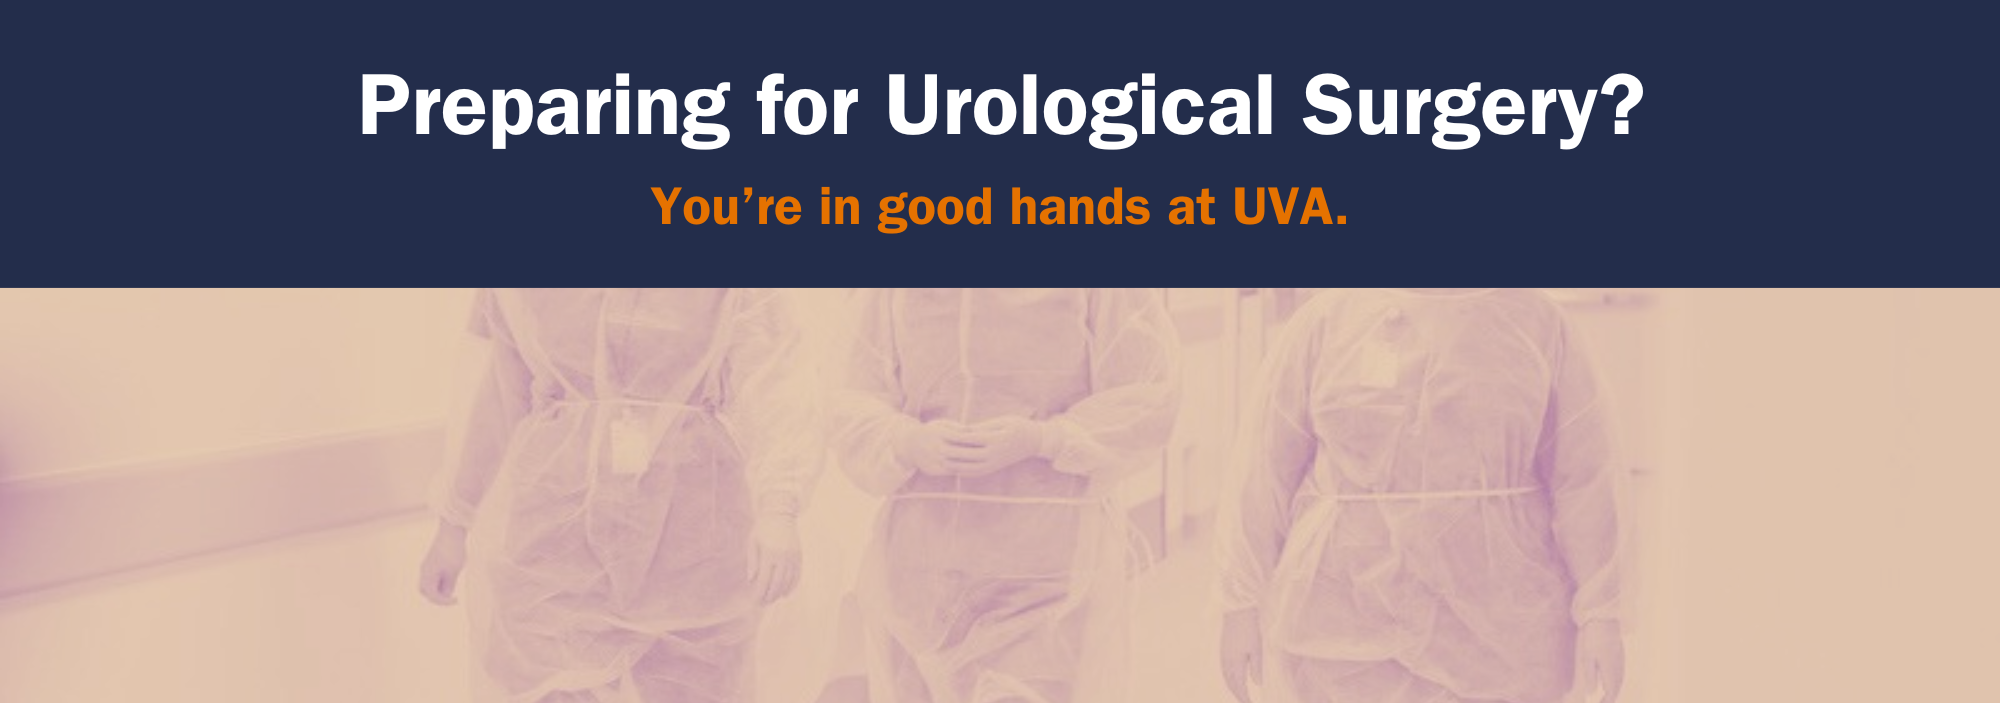 Preparing for Urological Surgery?